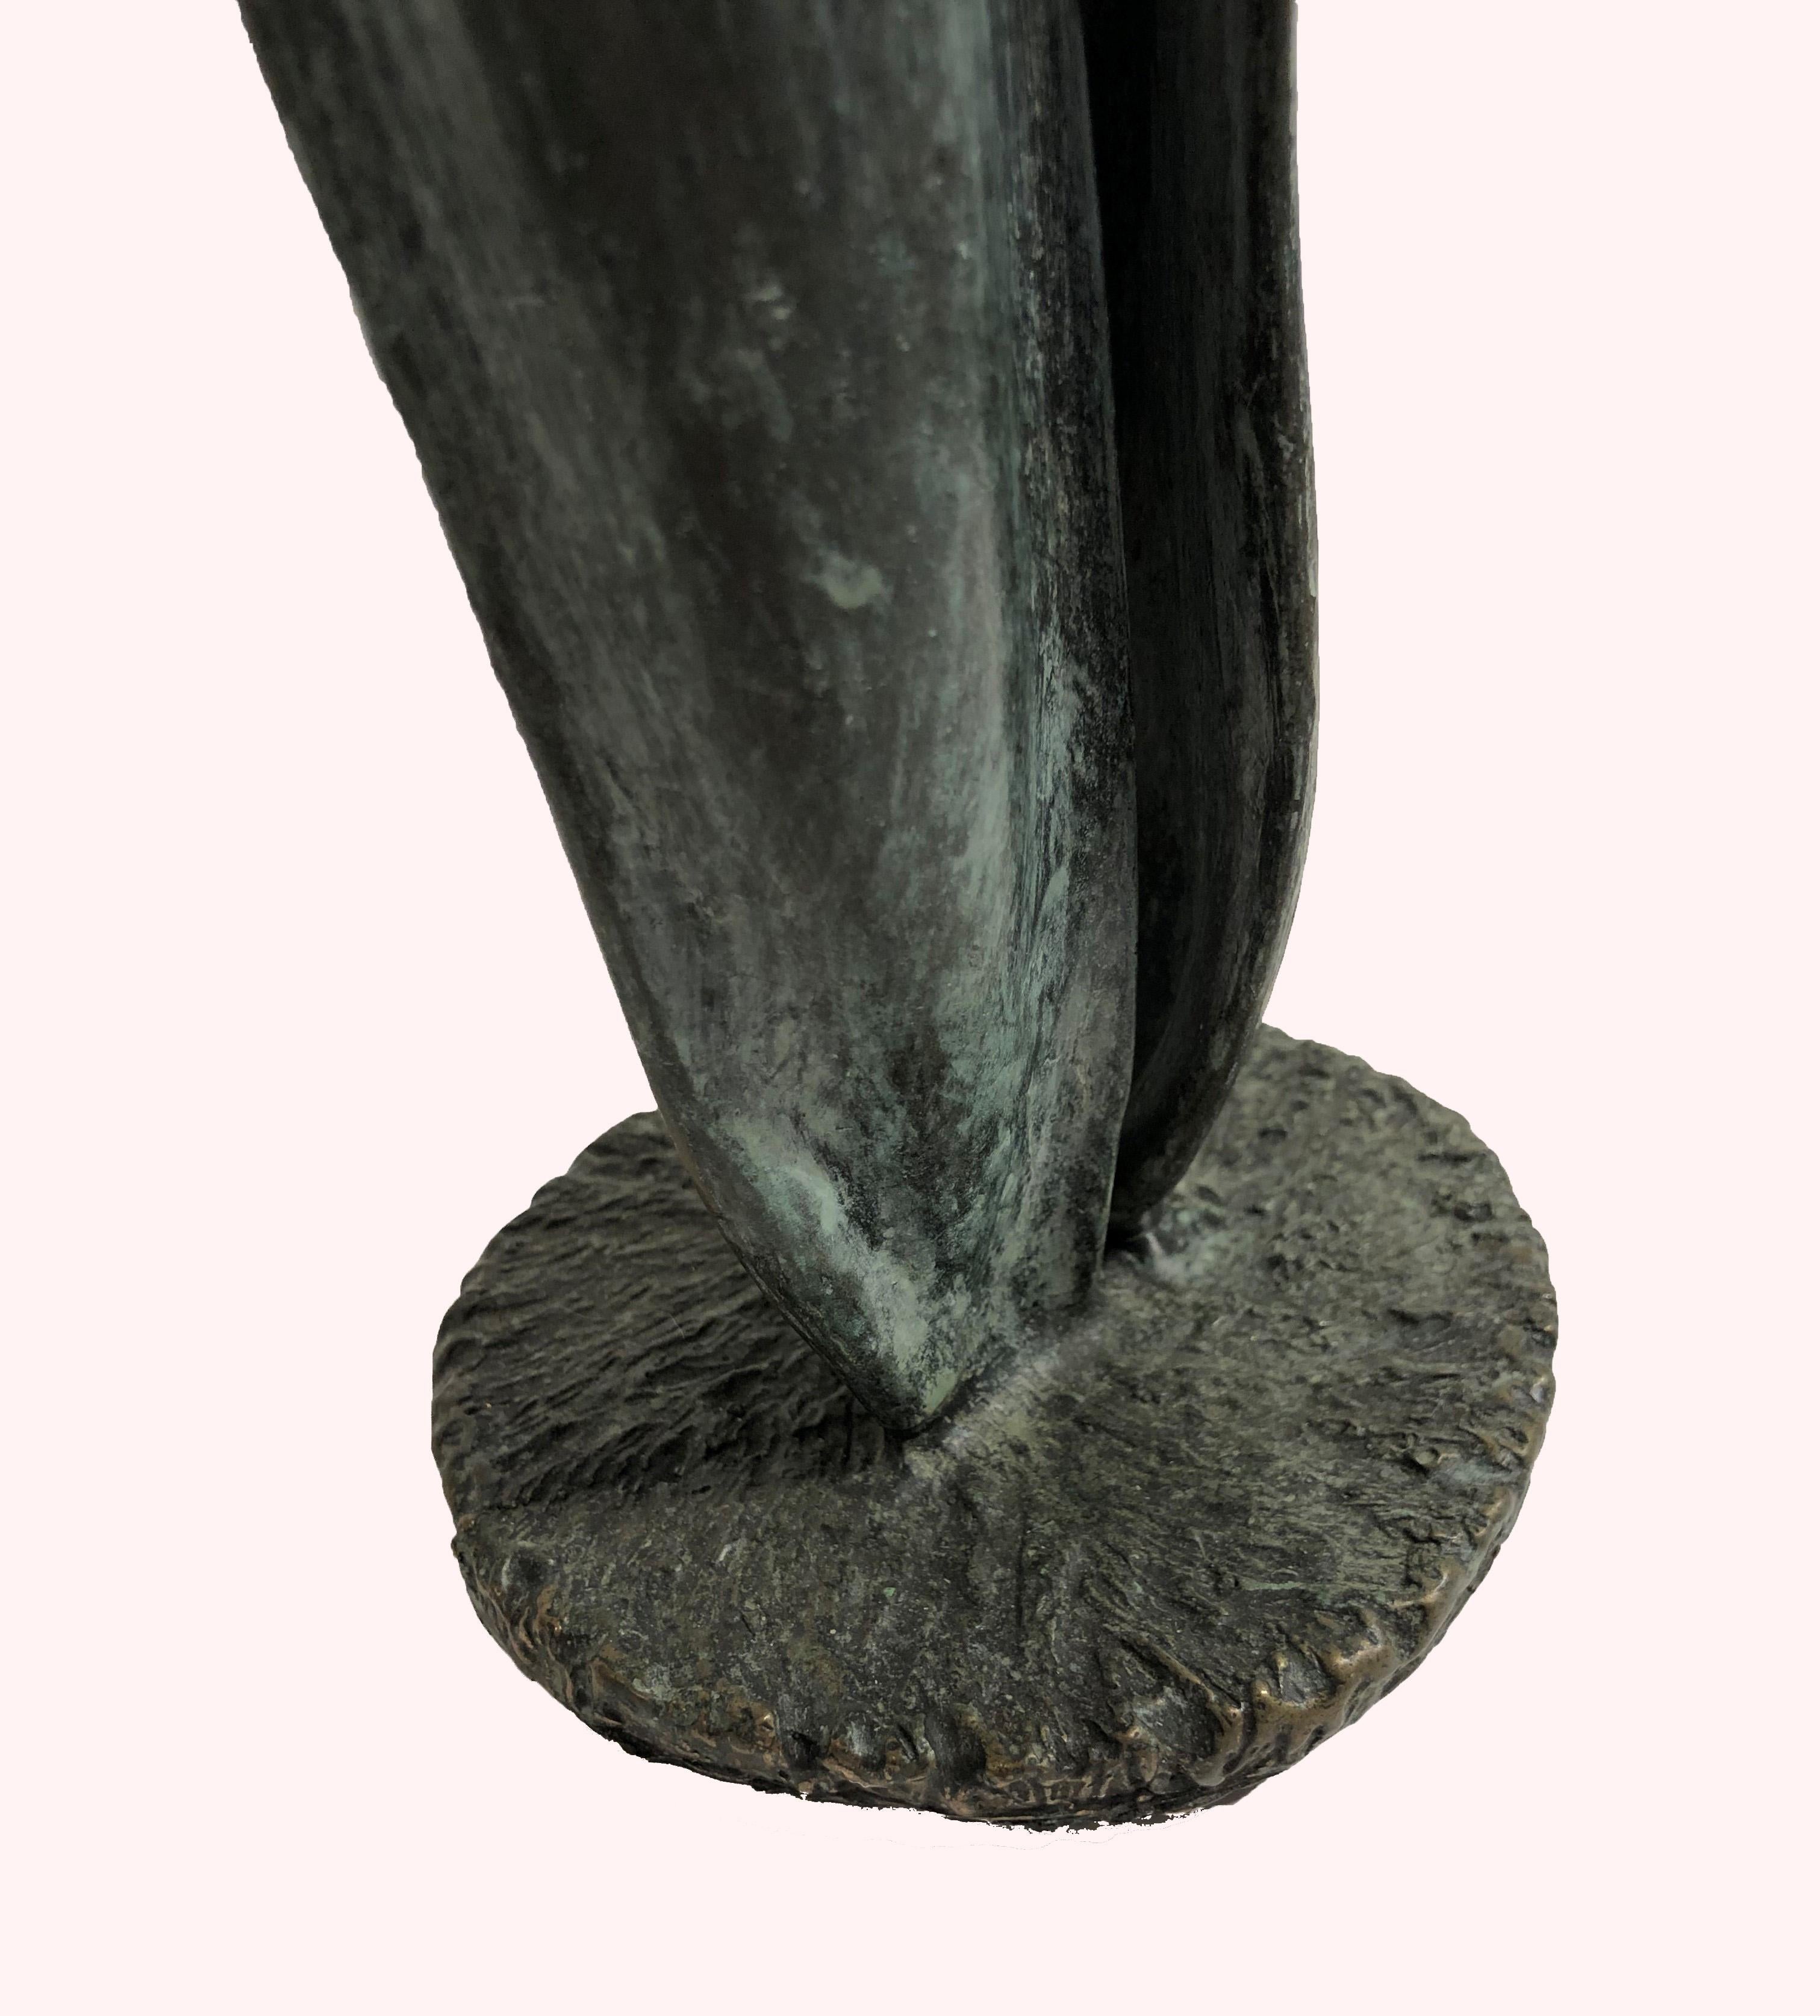 Tulip - bronze sculpture of emerging spring tulip - Realist Sculpture by Sylvia Beckman